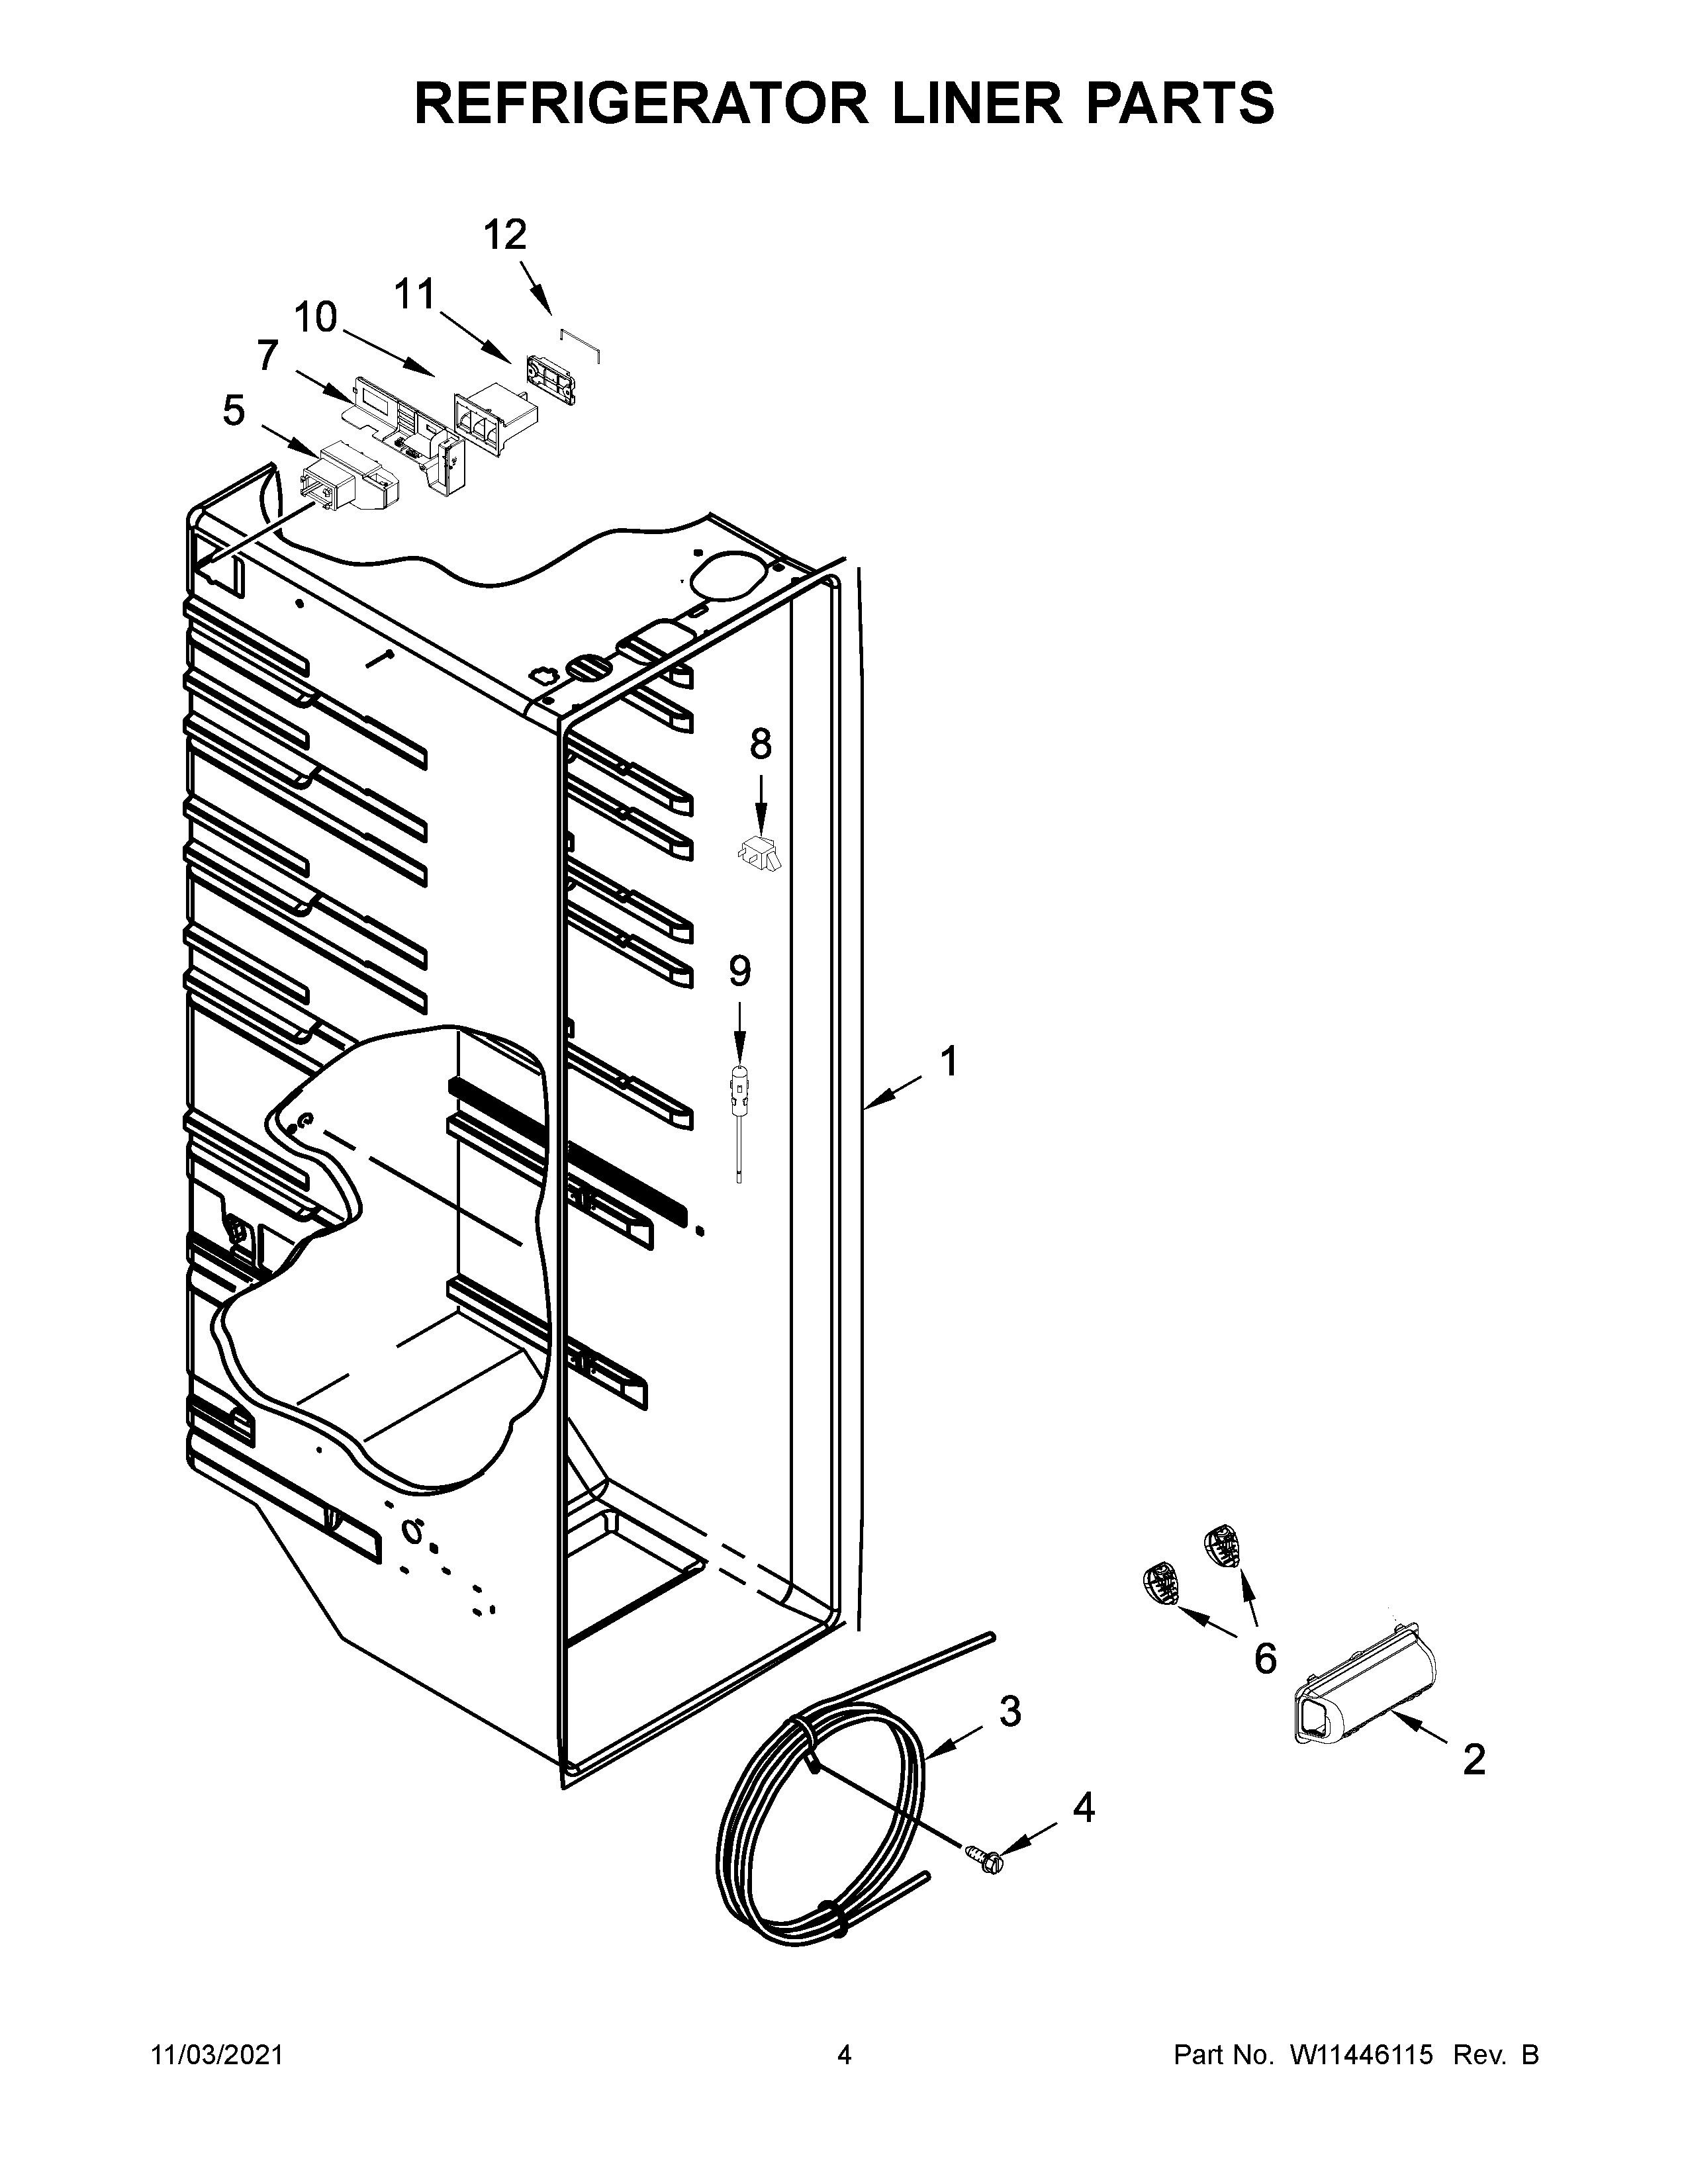 Whirlpool  Refrigerator  Refrigerator liner parts